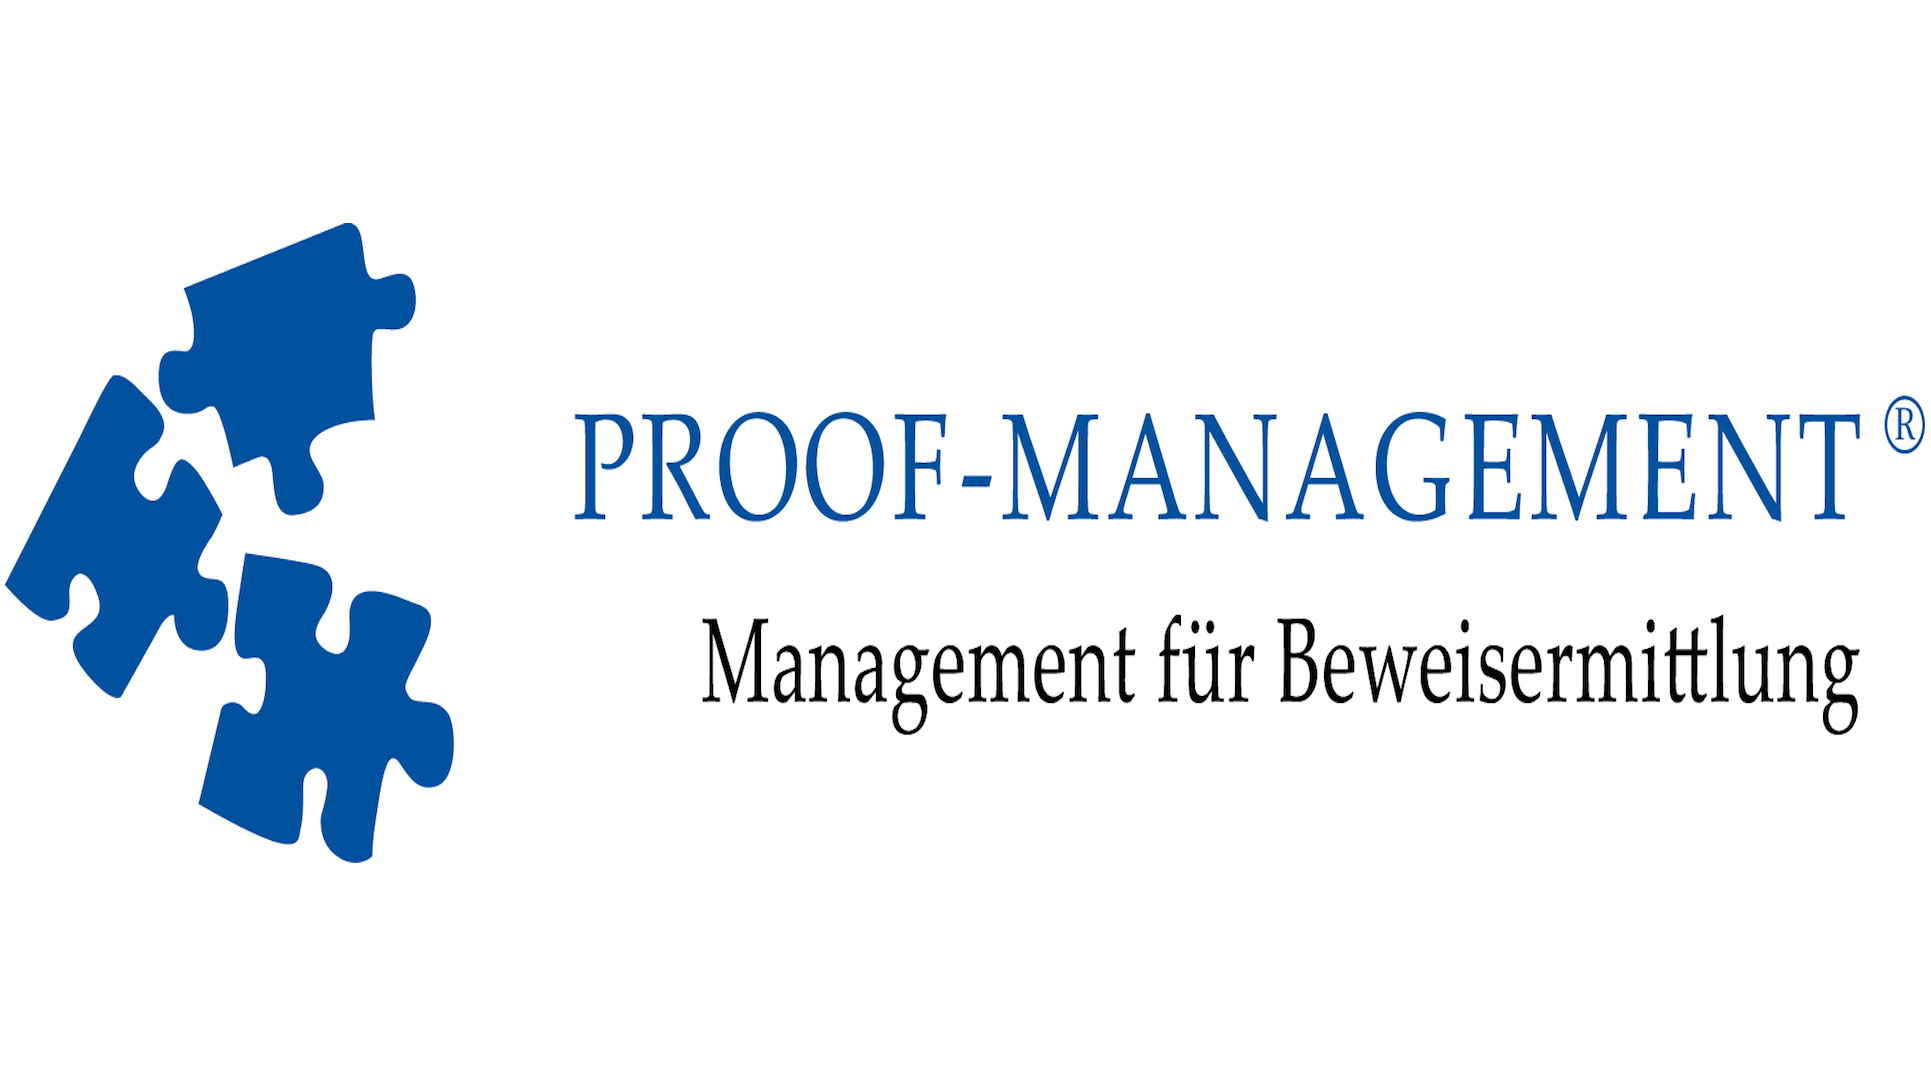 Detektei PROOF-MANAGEMENT GMBH, Hansaring 61 in Köln